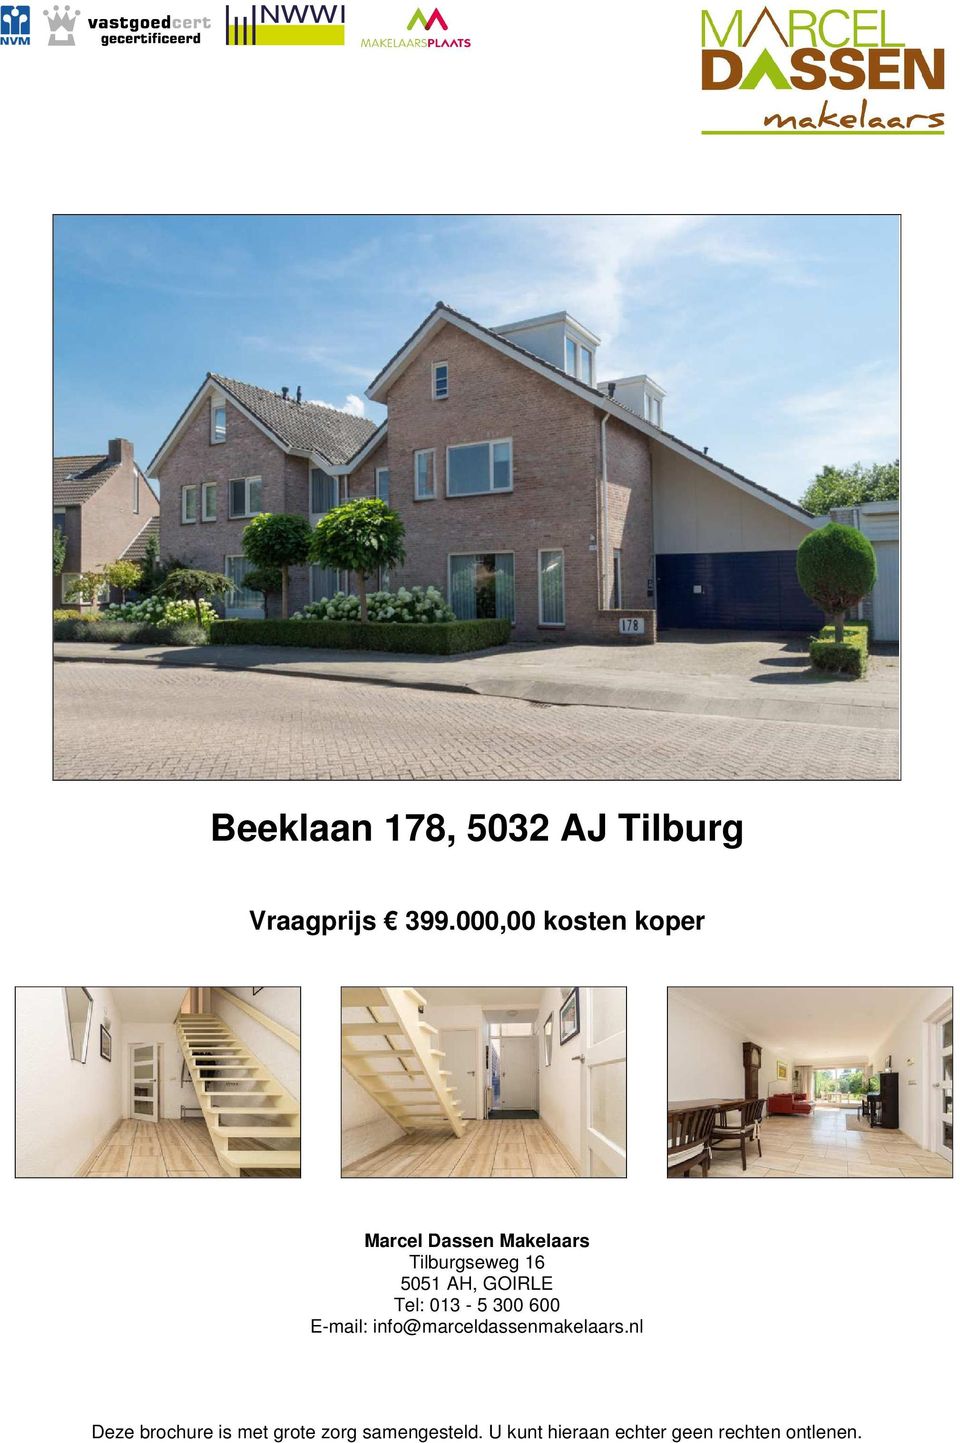 Tilburgseweg 16 5051 AH, GOIRLE Tel: 013-5